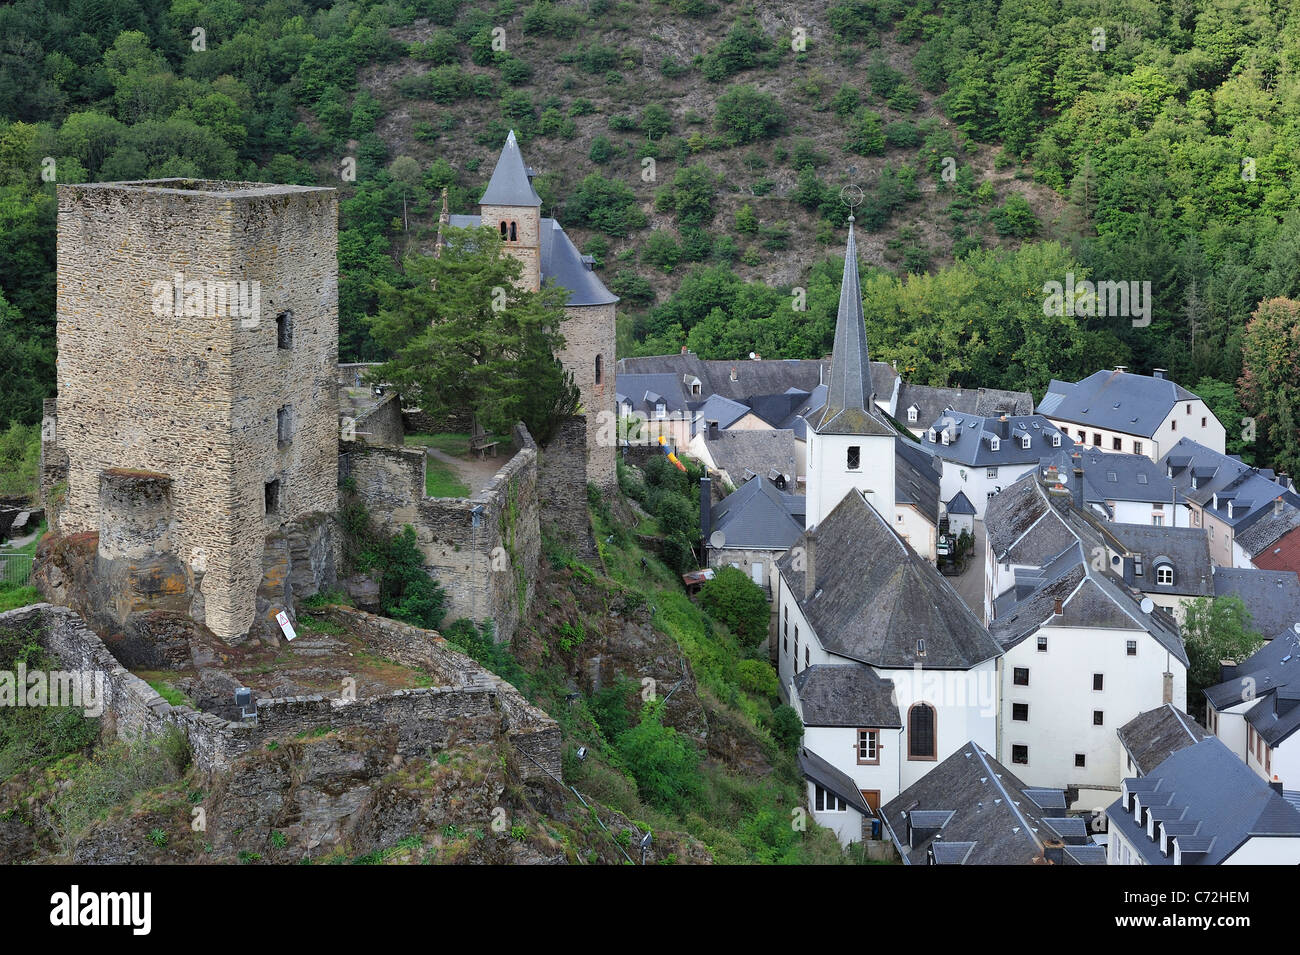 Das Dorf Esch-Sur-Sûre / Esch-Sauer mit Burg Ruinen entlang des Flusses Sauer / sauer, Luxemburg Stockfoto